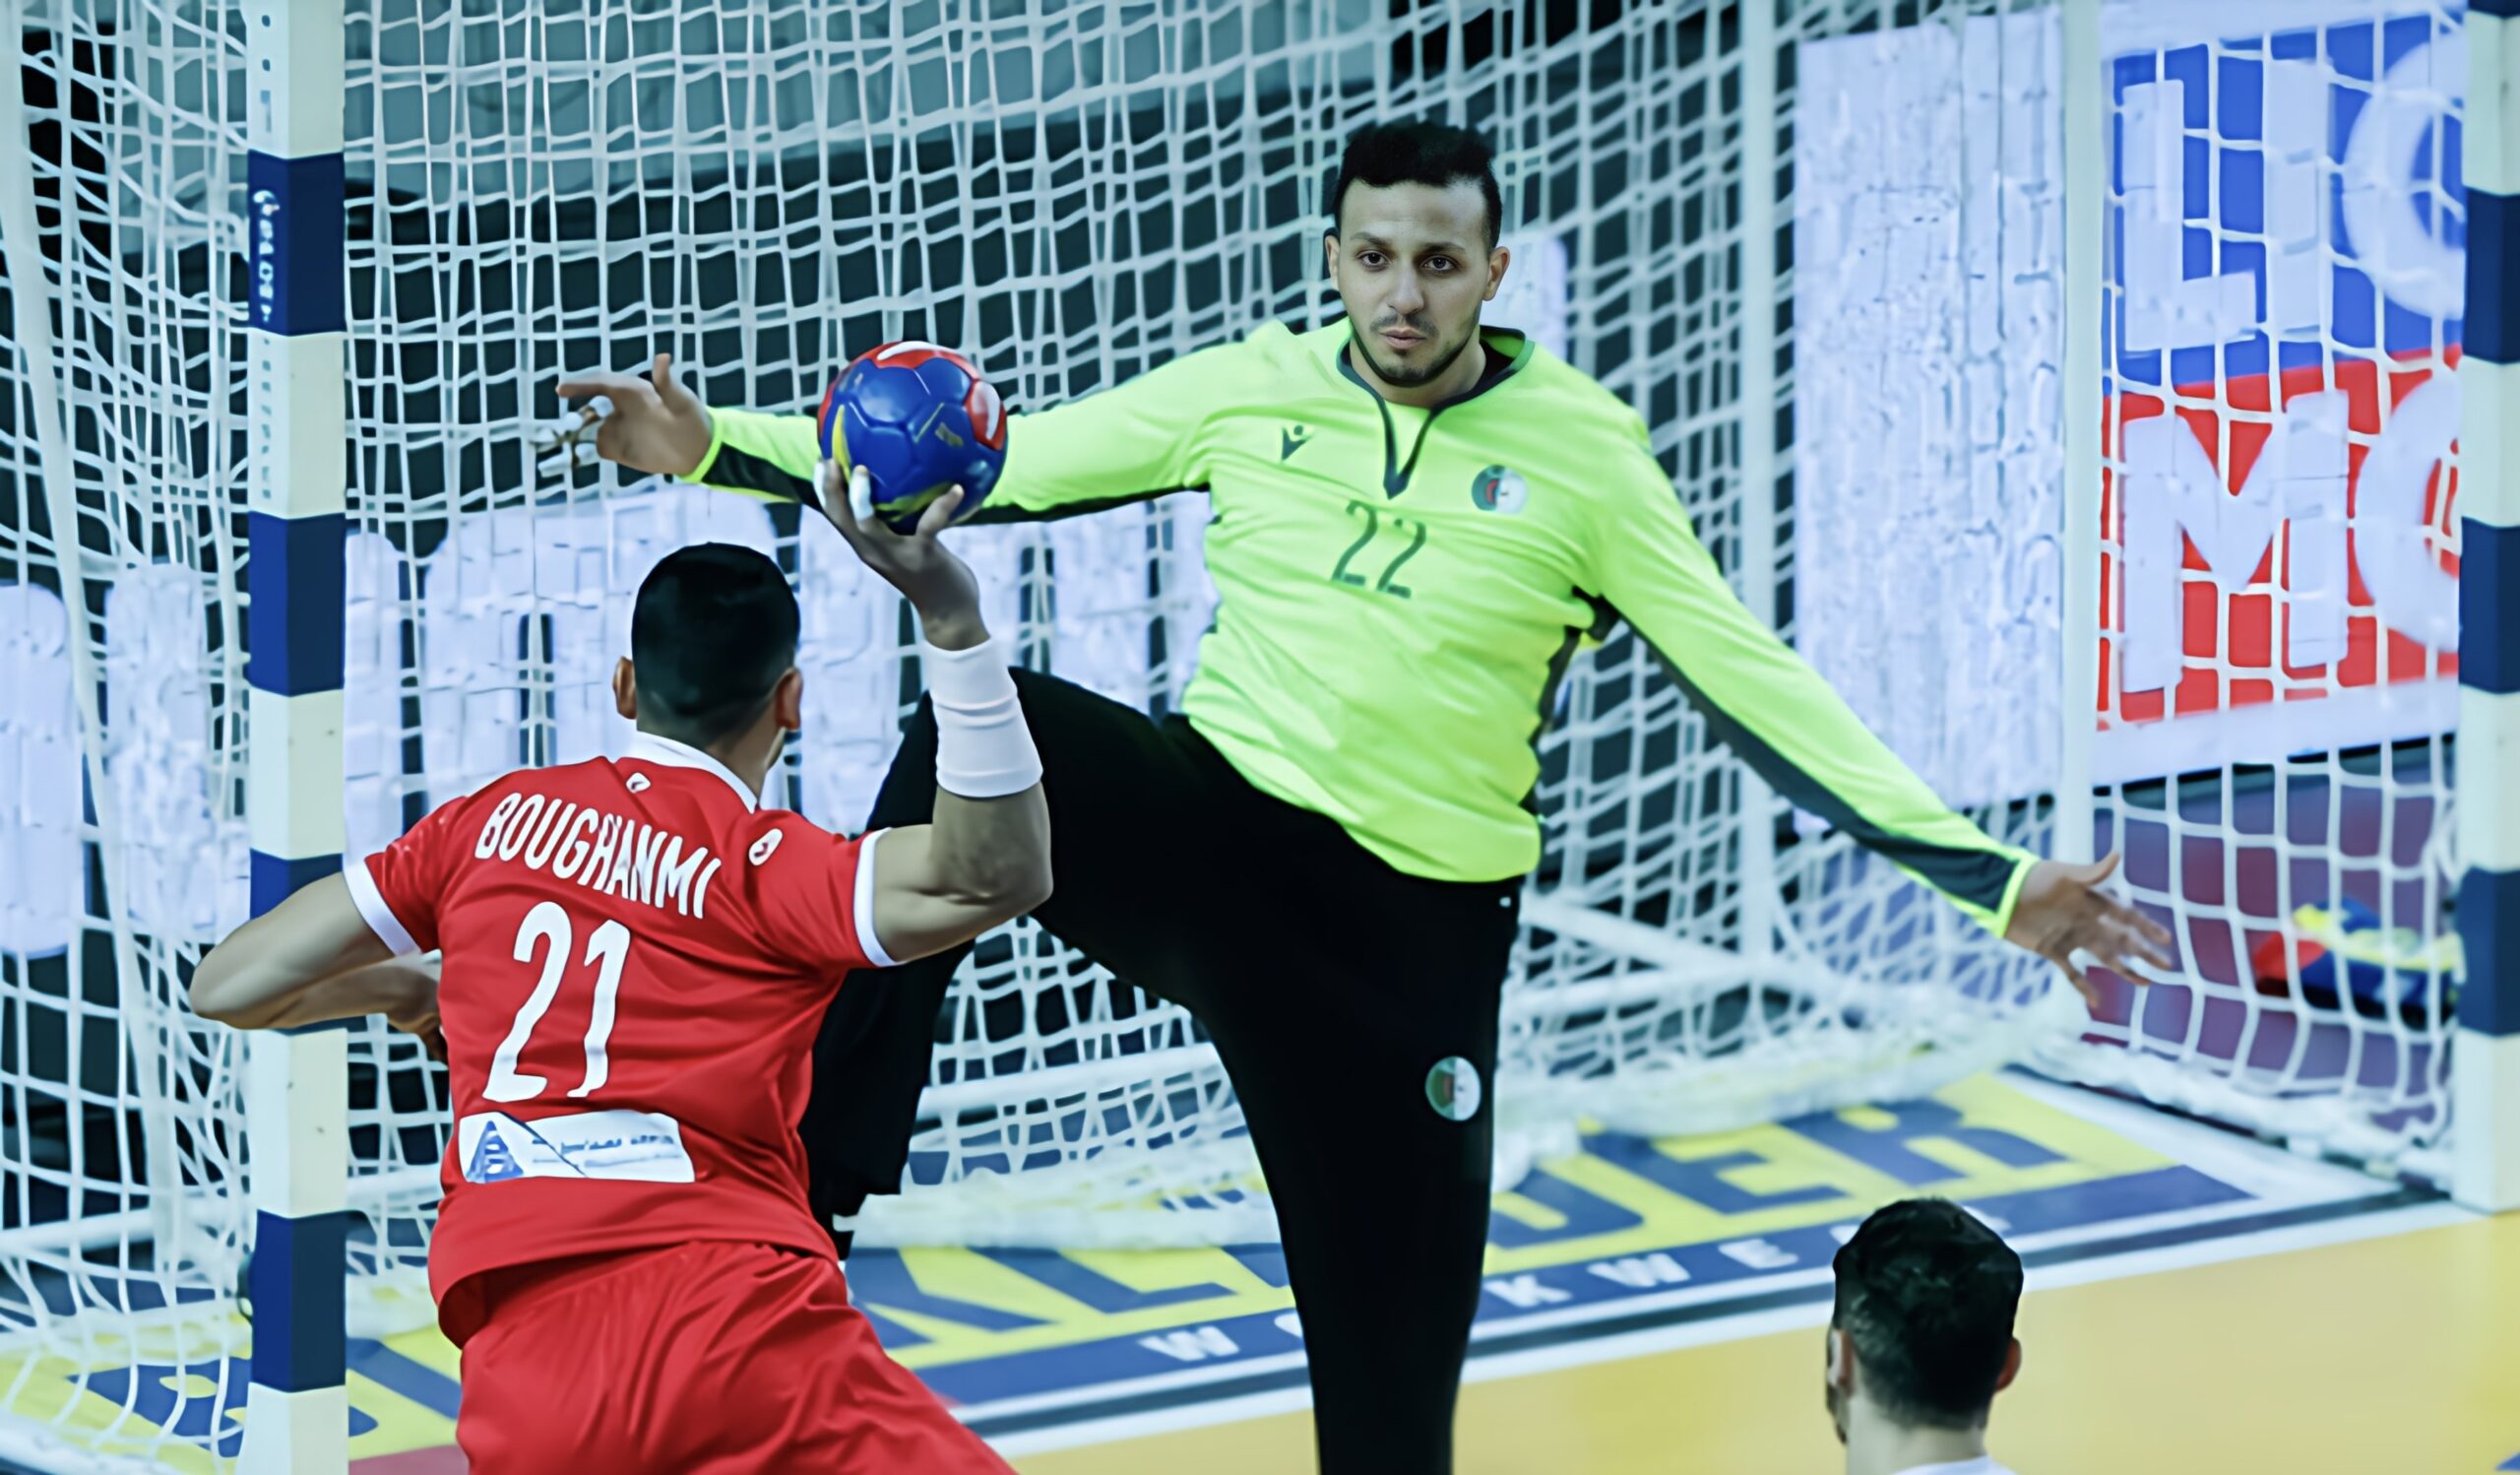 Tunisie handball 